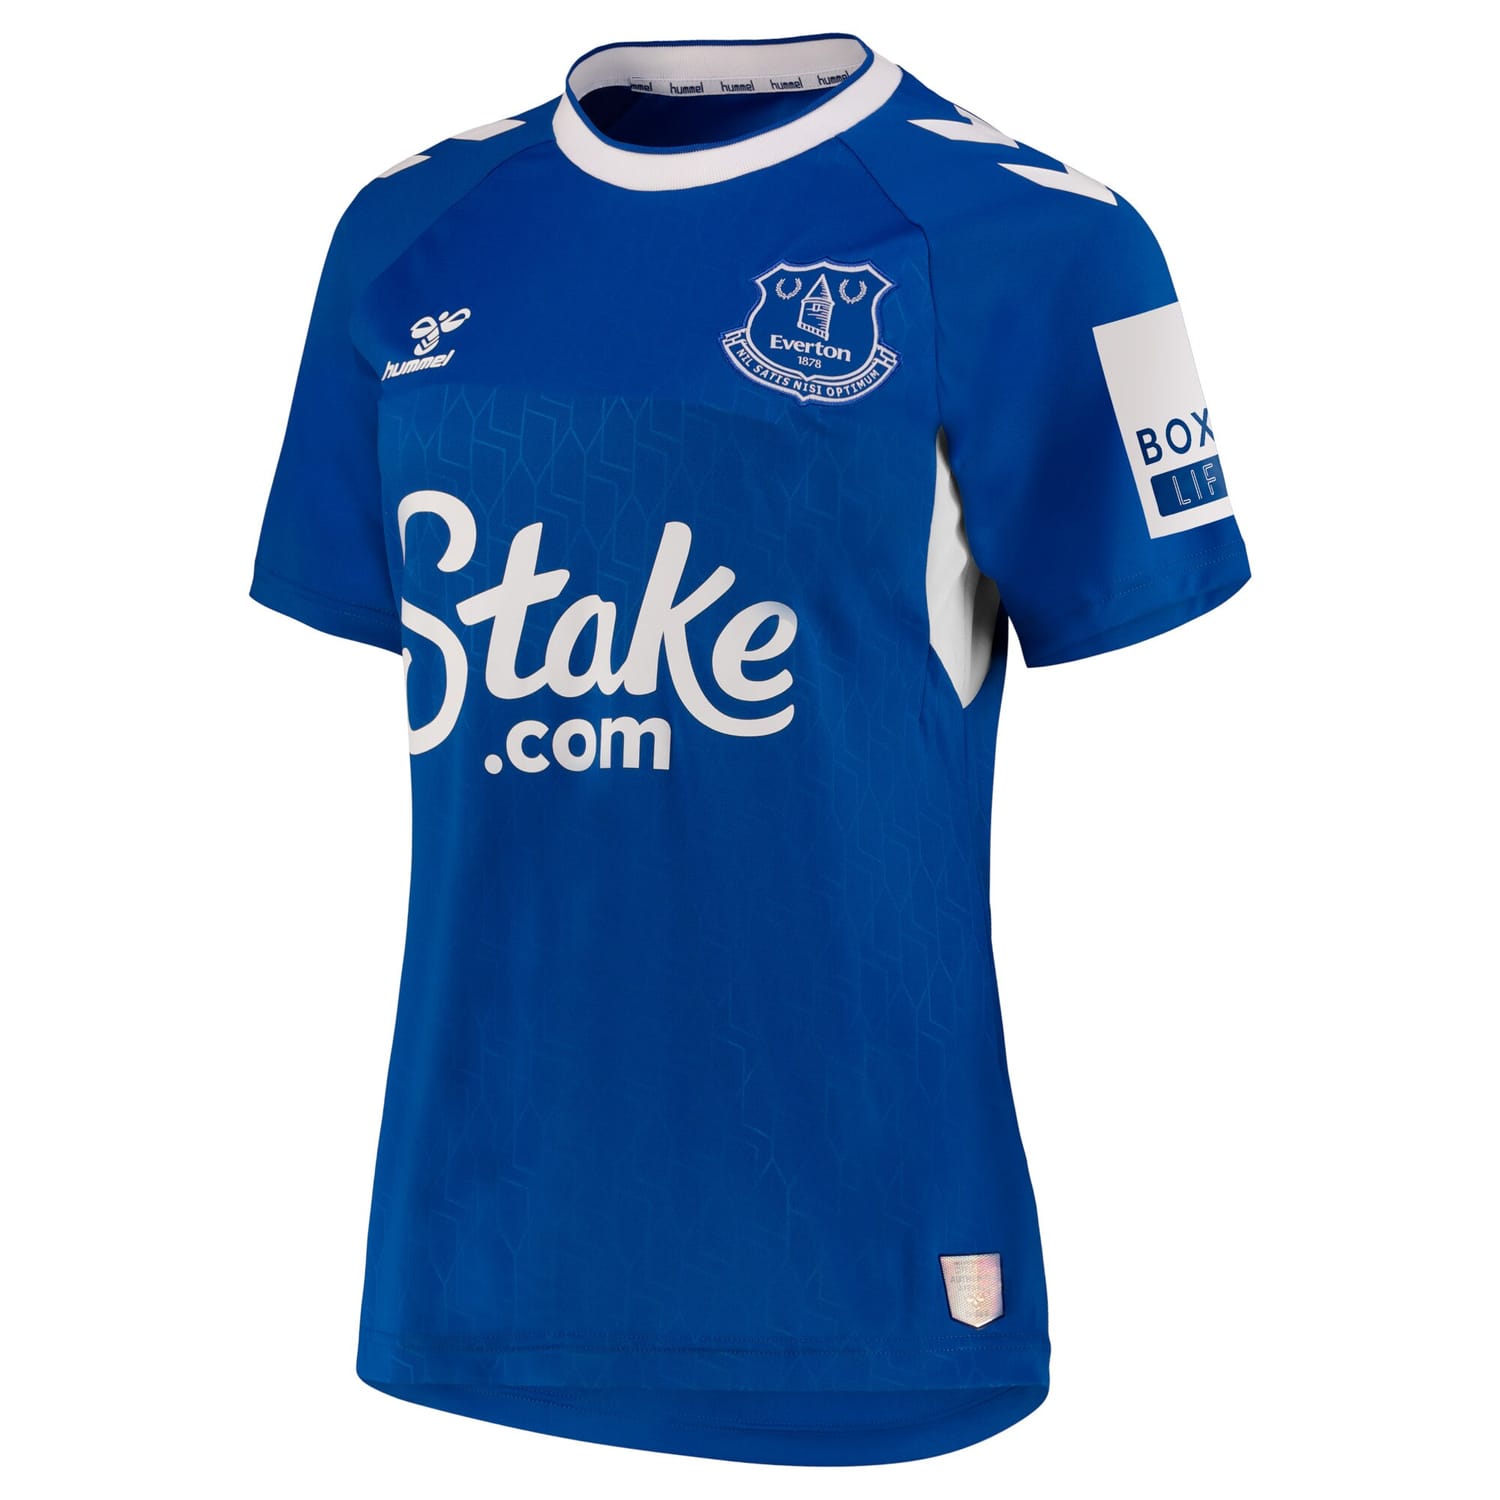 Premier League Everton Home Jersey Shirt 2022-23 player Nicoline Sørensen 14 printing for Women